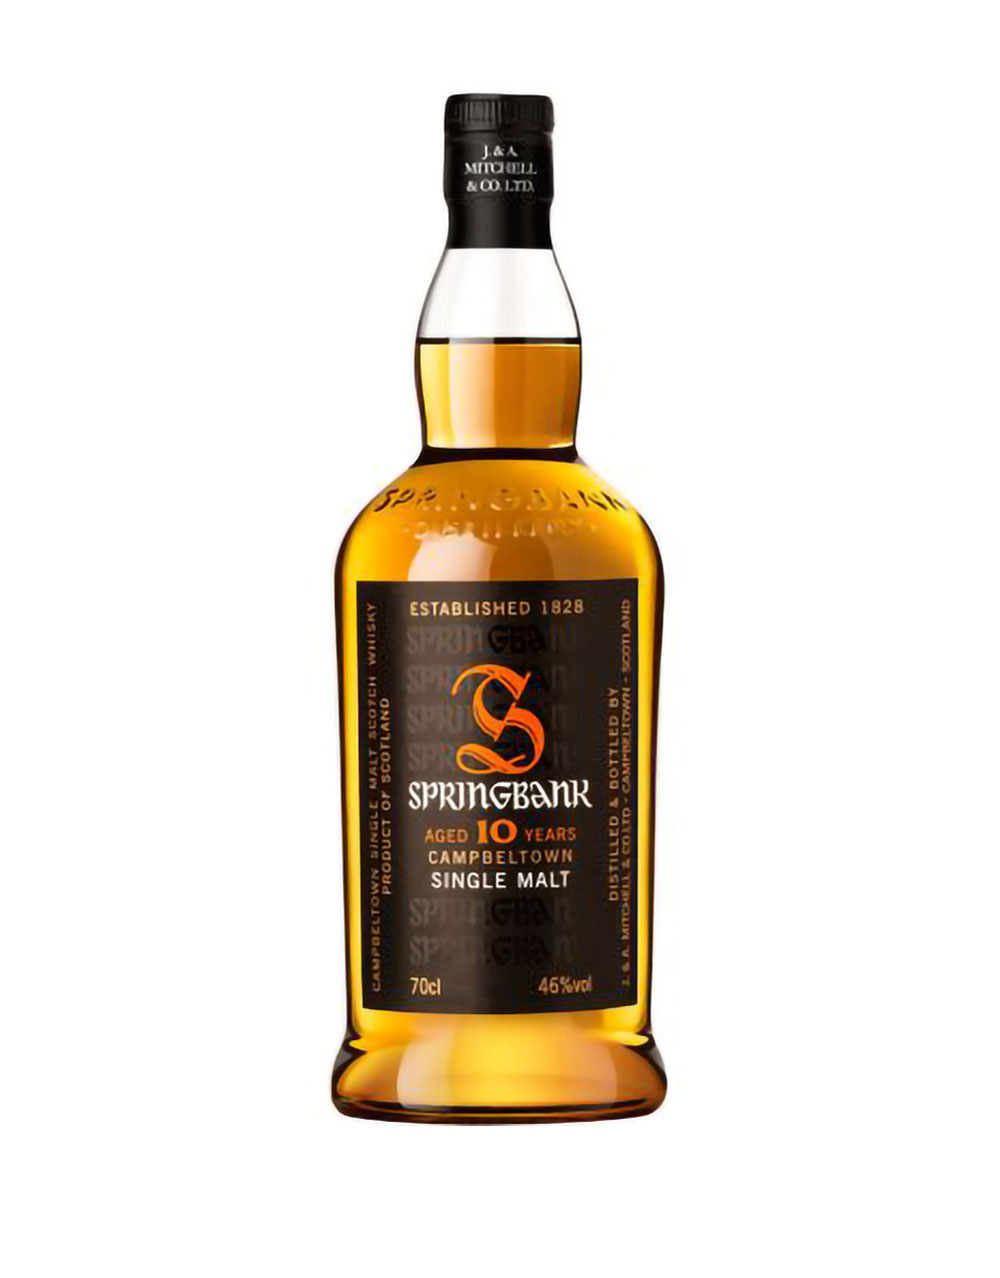 The Macallan edition No. 3 Single Malt Scotch Whisky